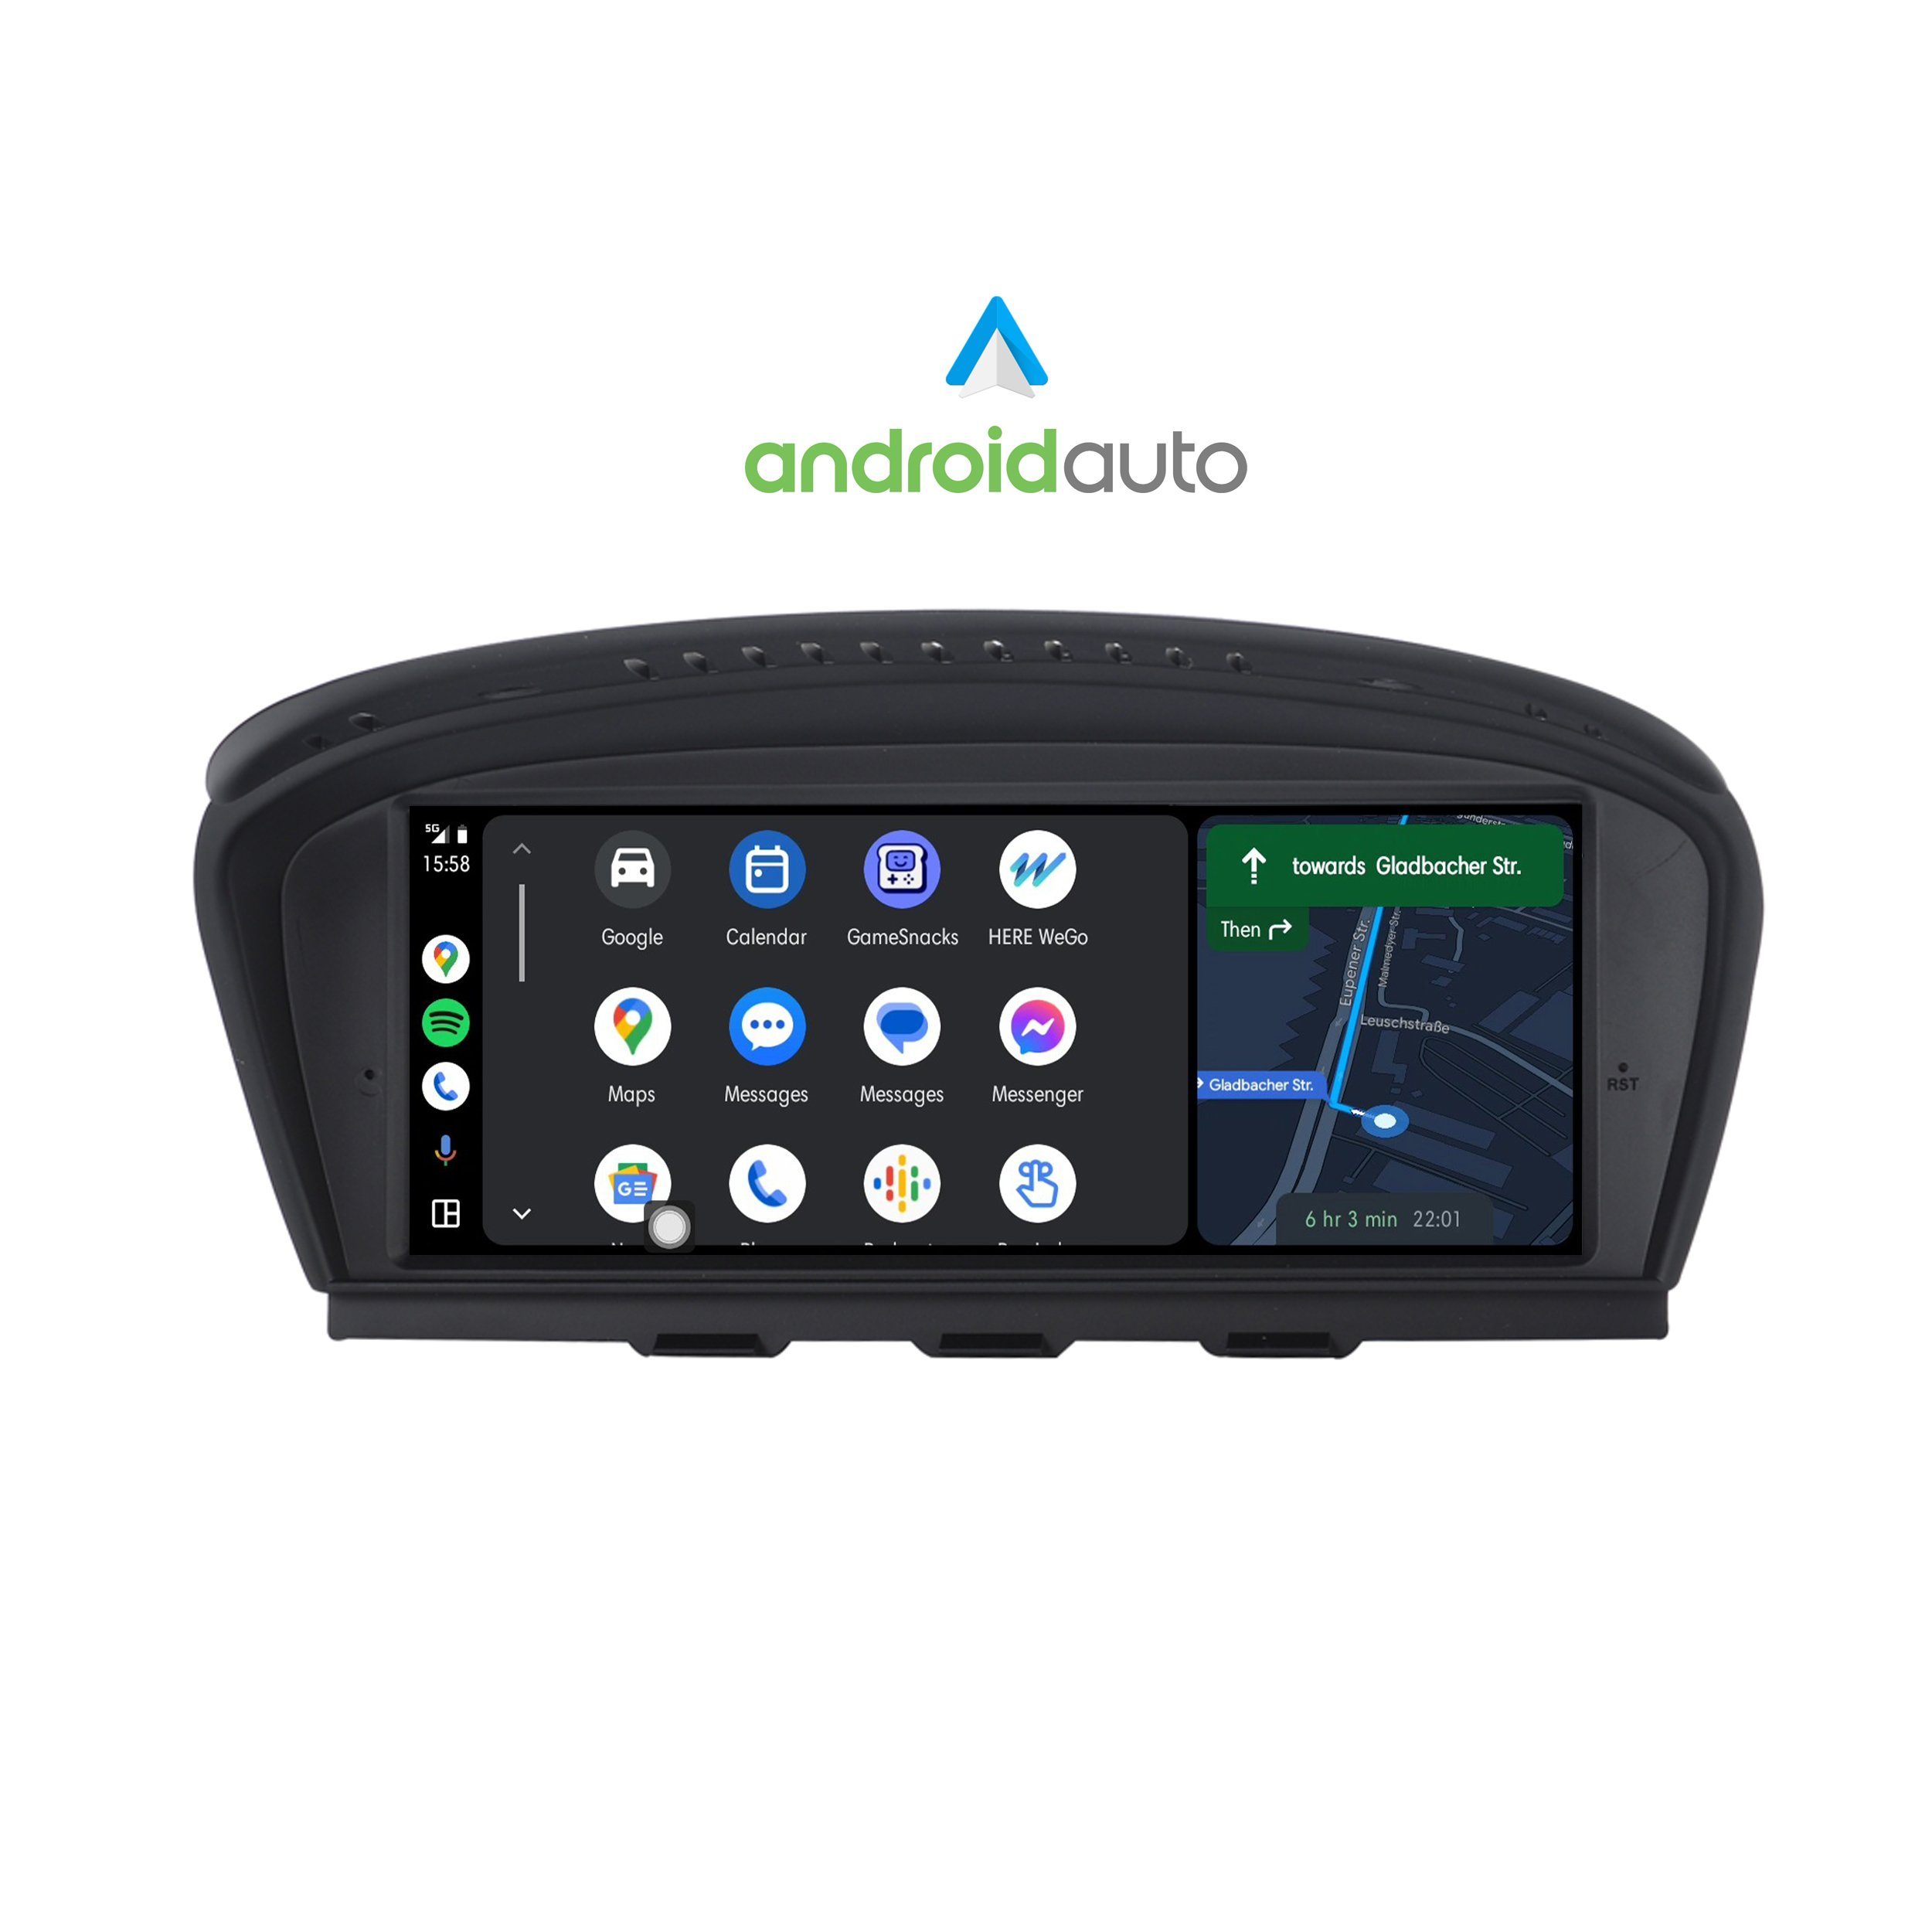 E65 GPS Android Einbau-Navigationsgerät Für TAFFIO 8.8" + BMW Touchscreen ADAPTER CarPlay E66 AUX